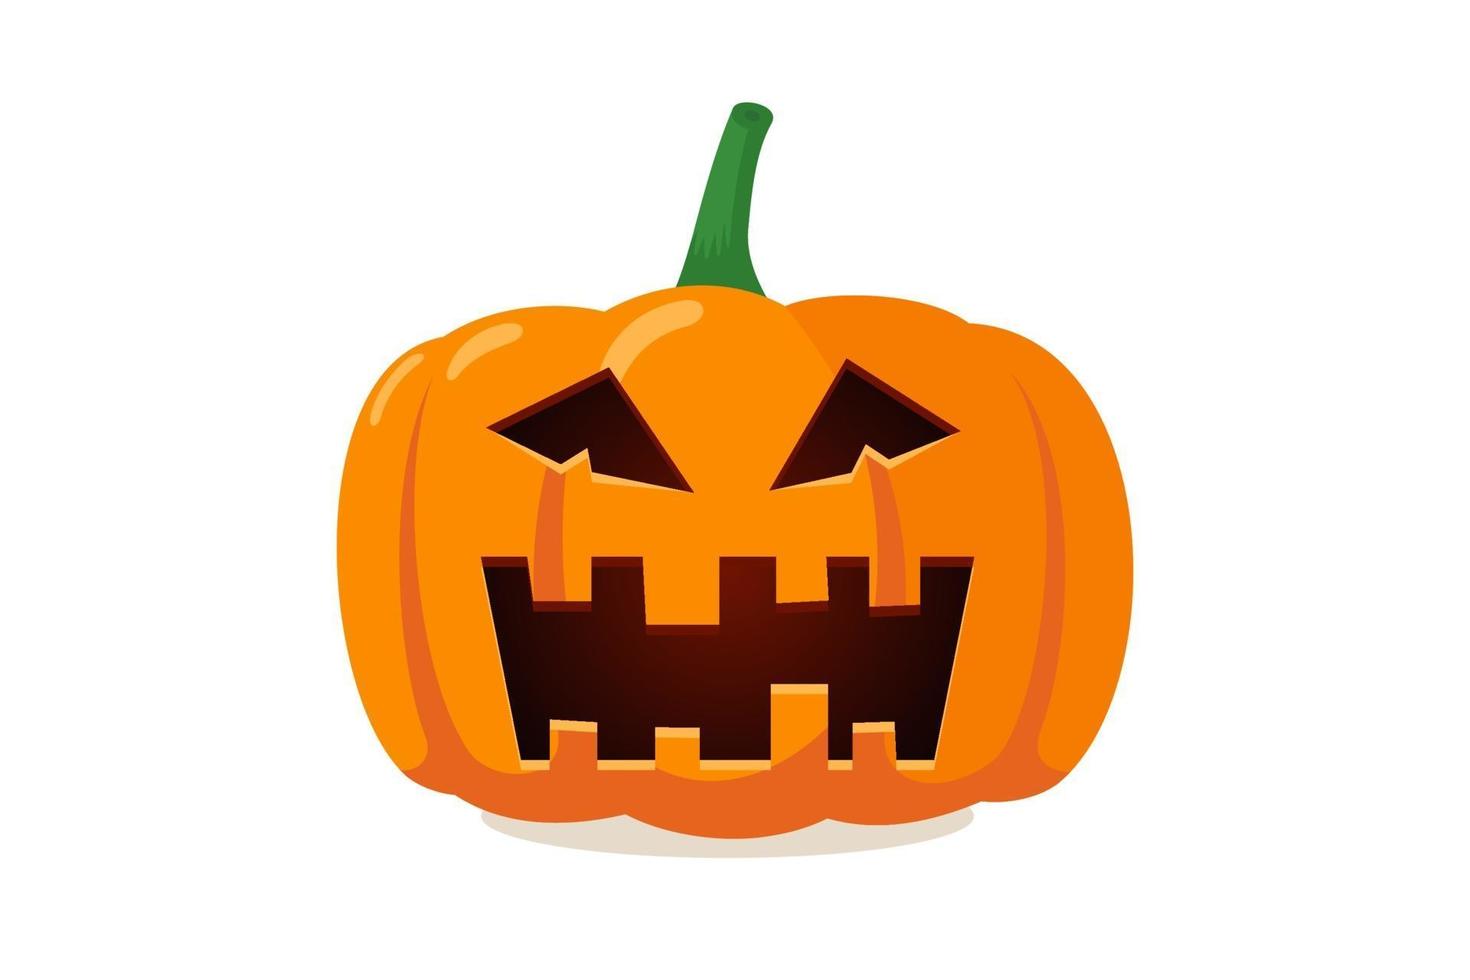 Scary spooky carved pumpkin jack-o-lantern vector